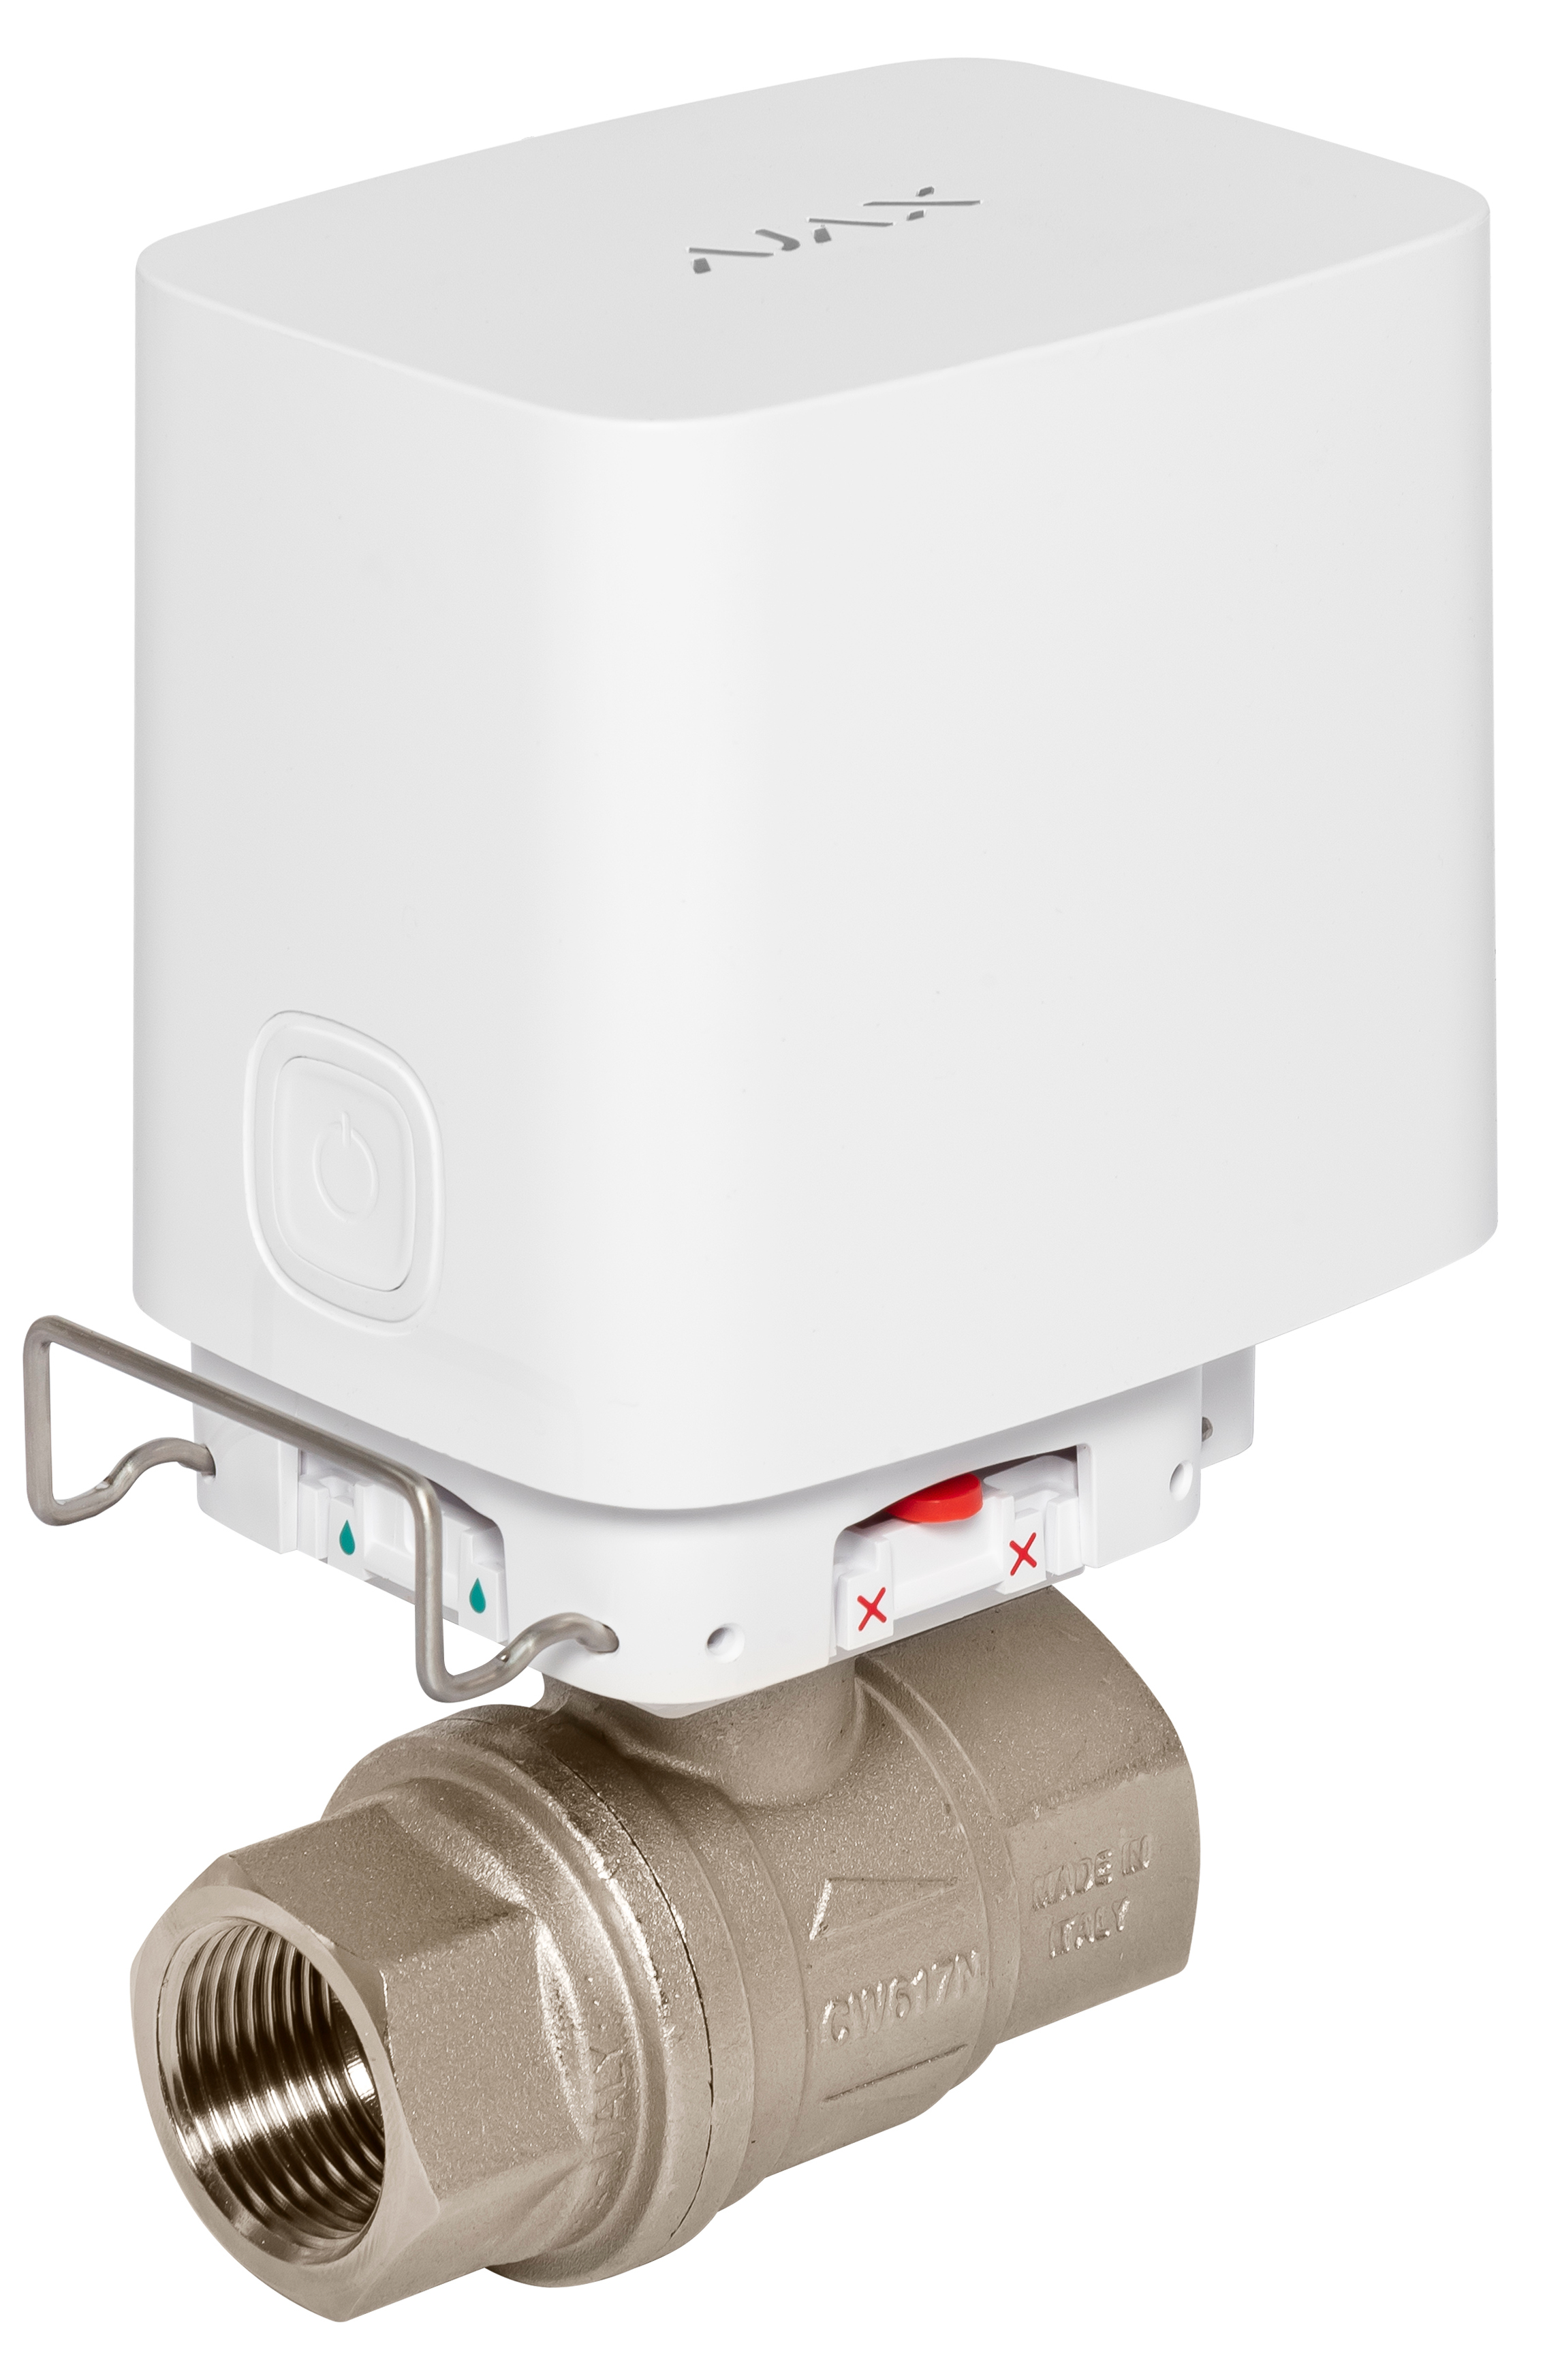 Система защиты от протечки воды Ajax WaterStop 3/4" White + Hub 2 Plus White инструкция - изображение 6